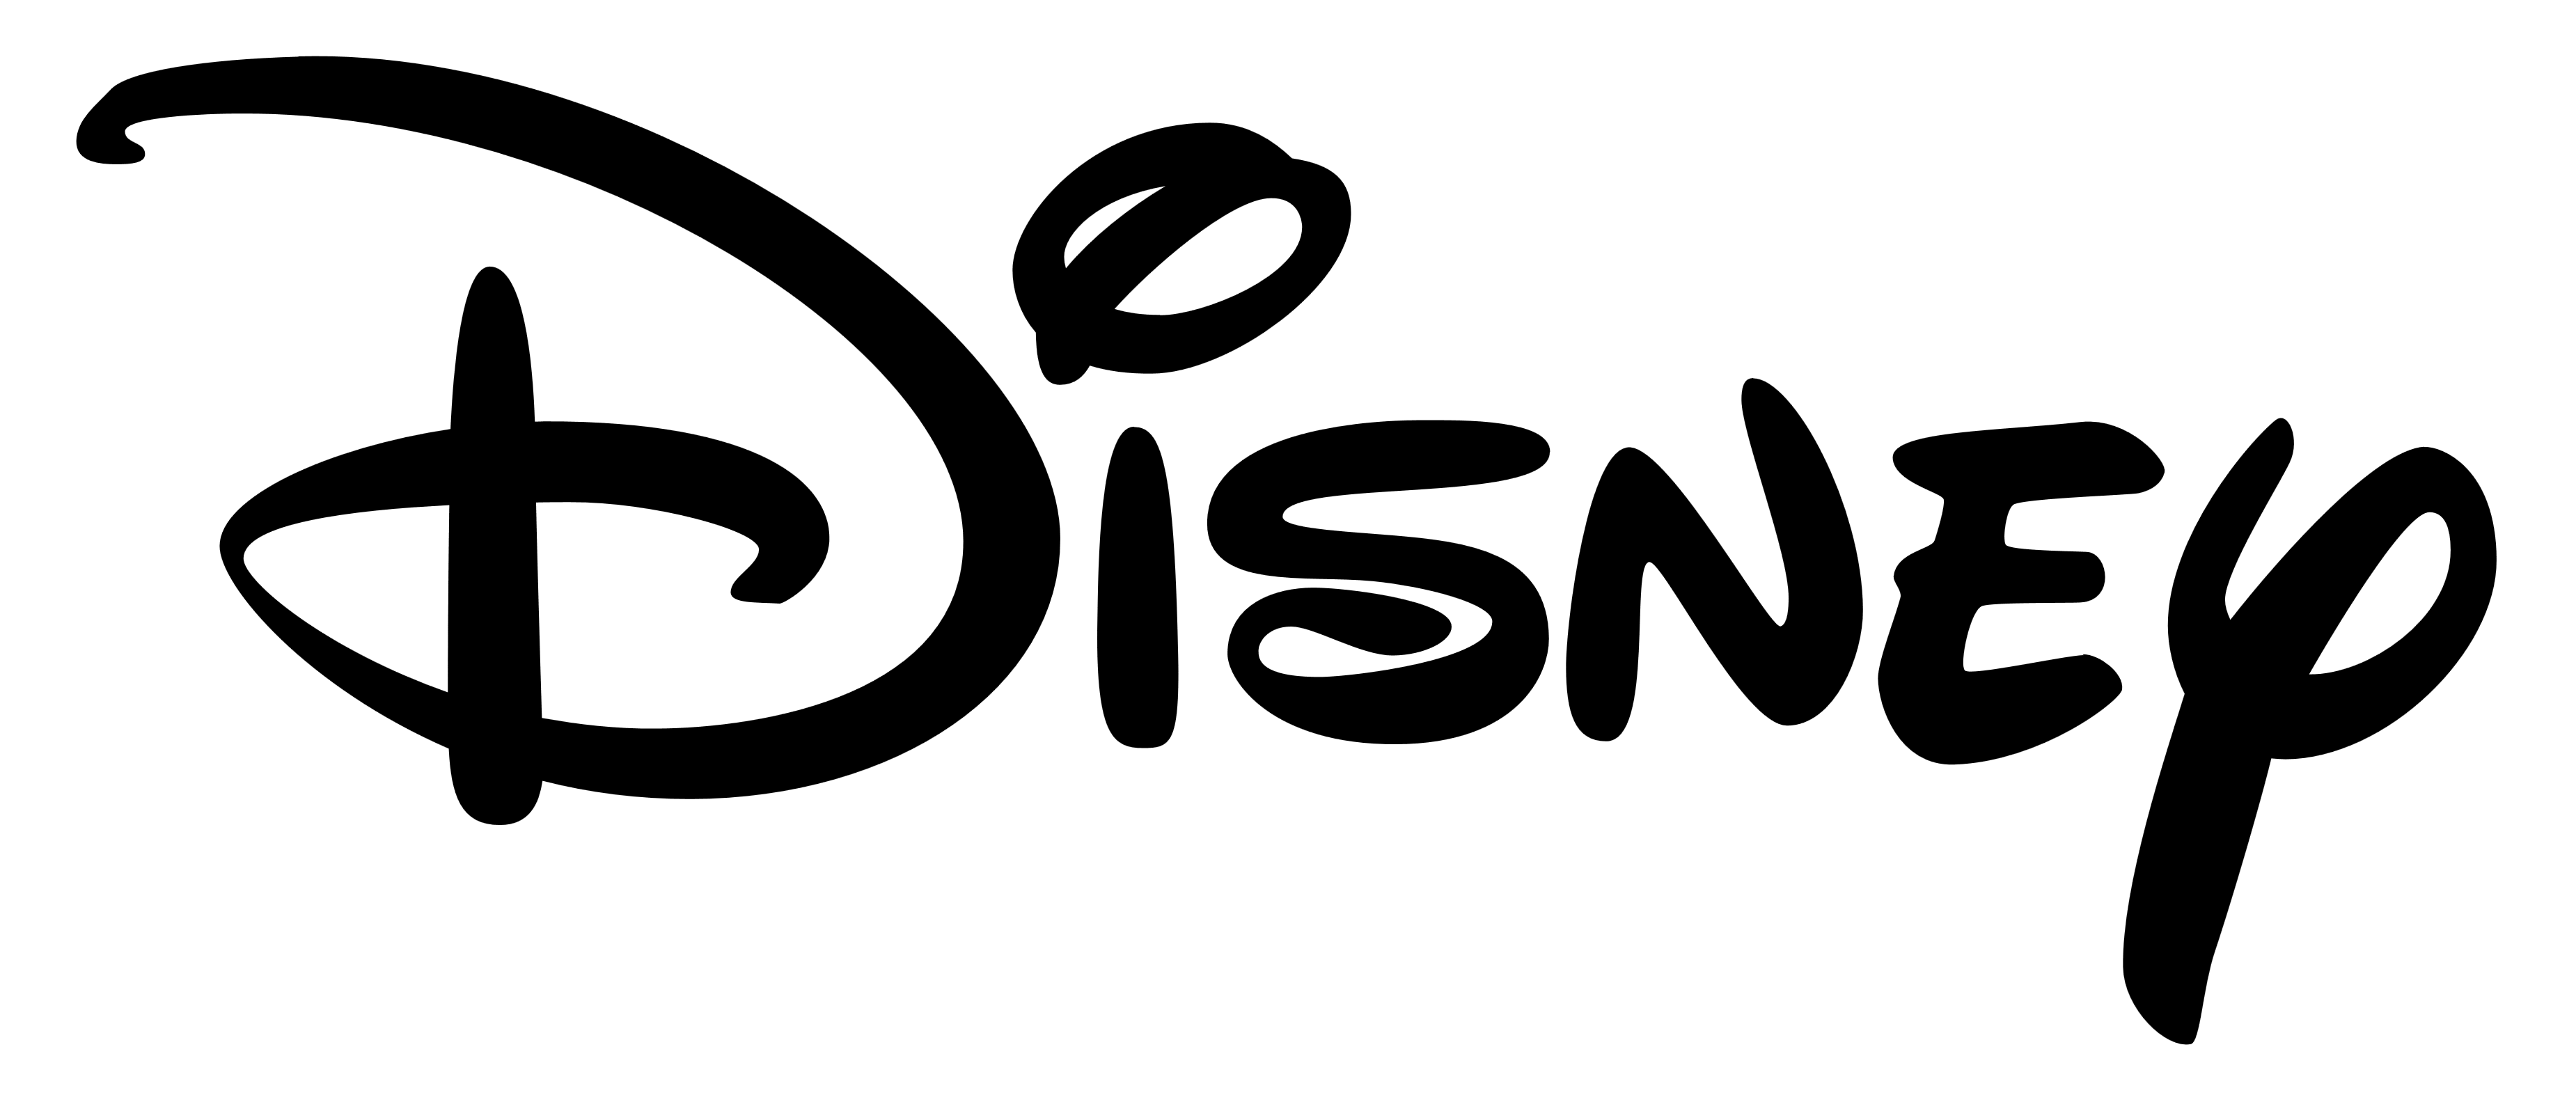 Diney Logo - The Walt Disney Company – Logos, brands and logotypes